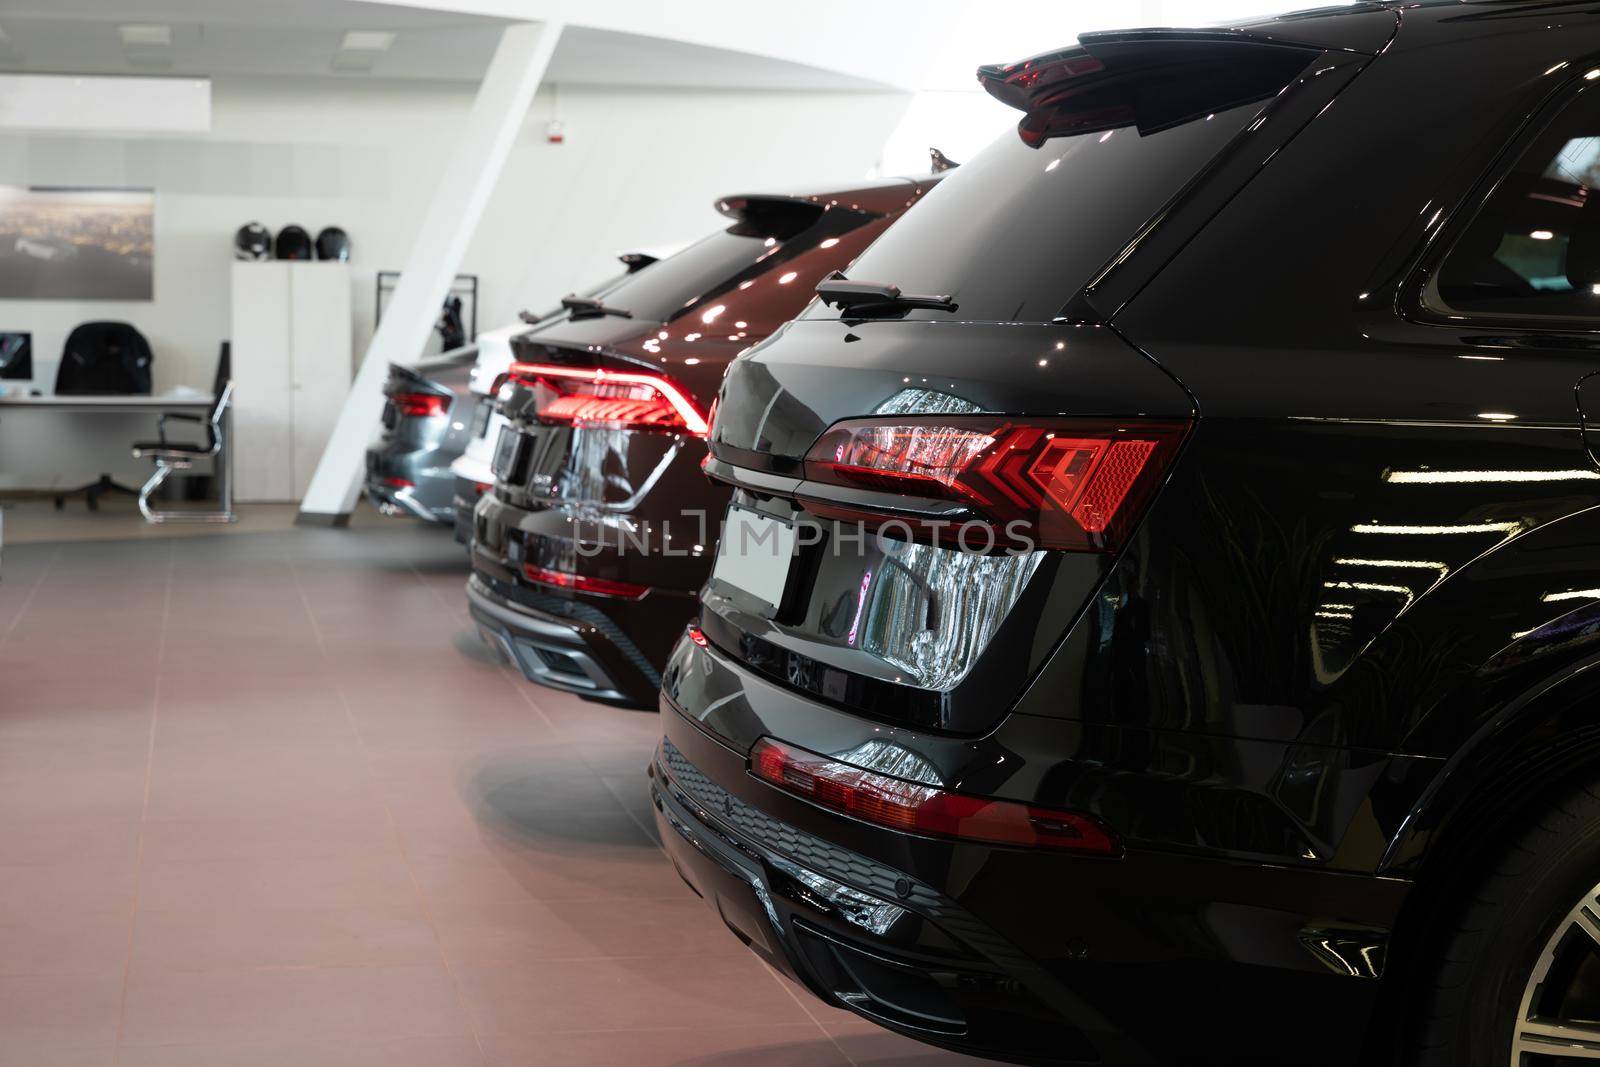 dealership car showroom of premium SUVs, cars in a row, rear view.